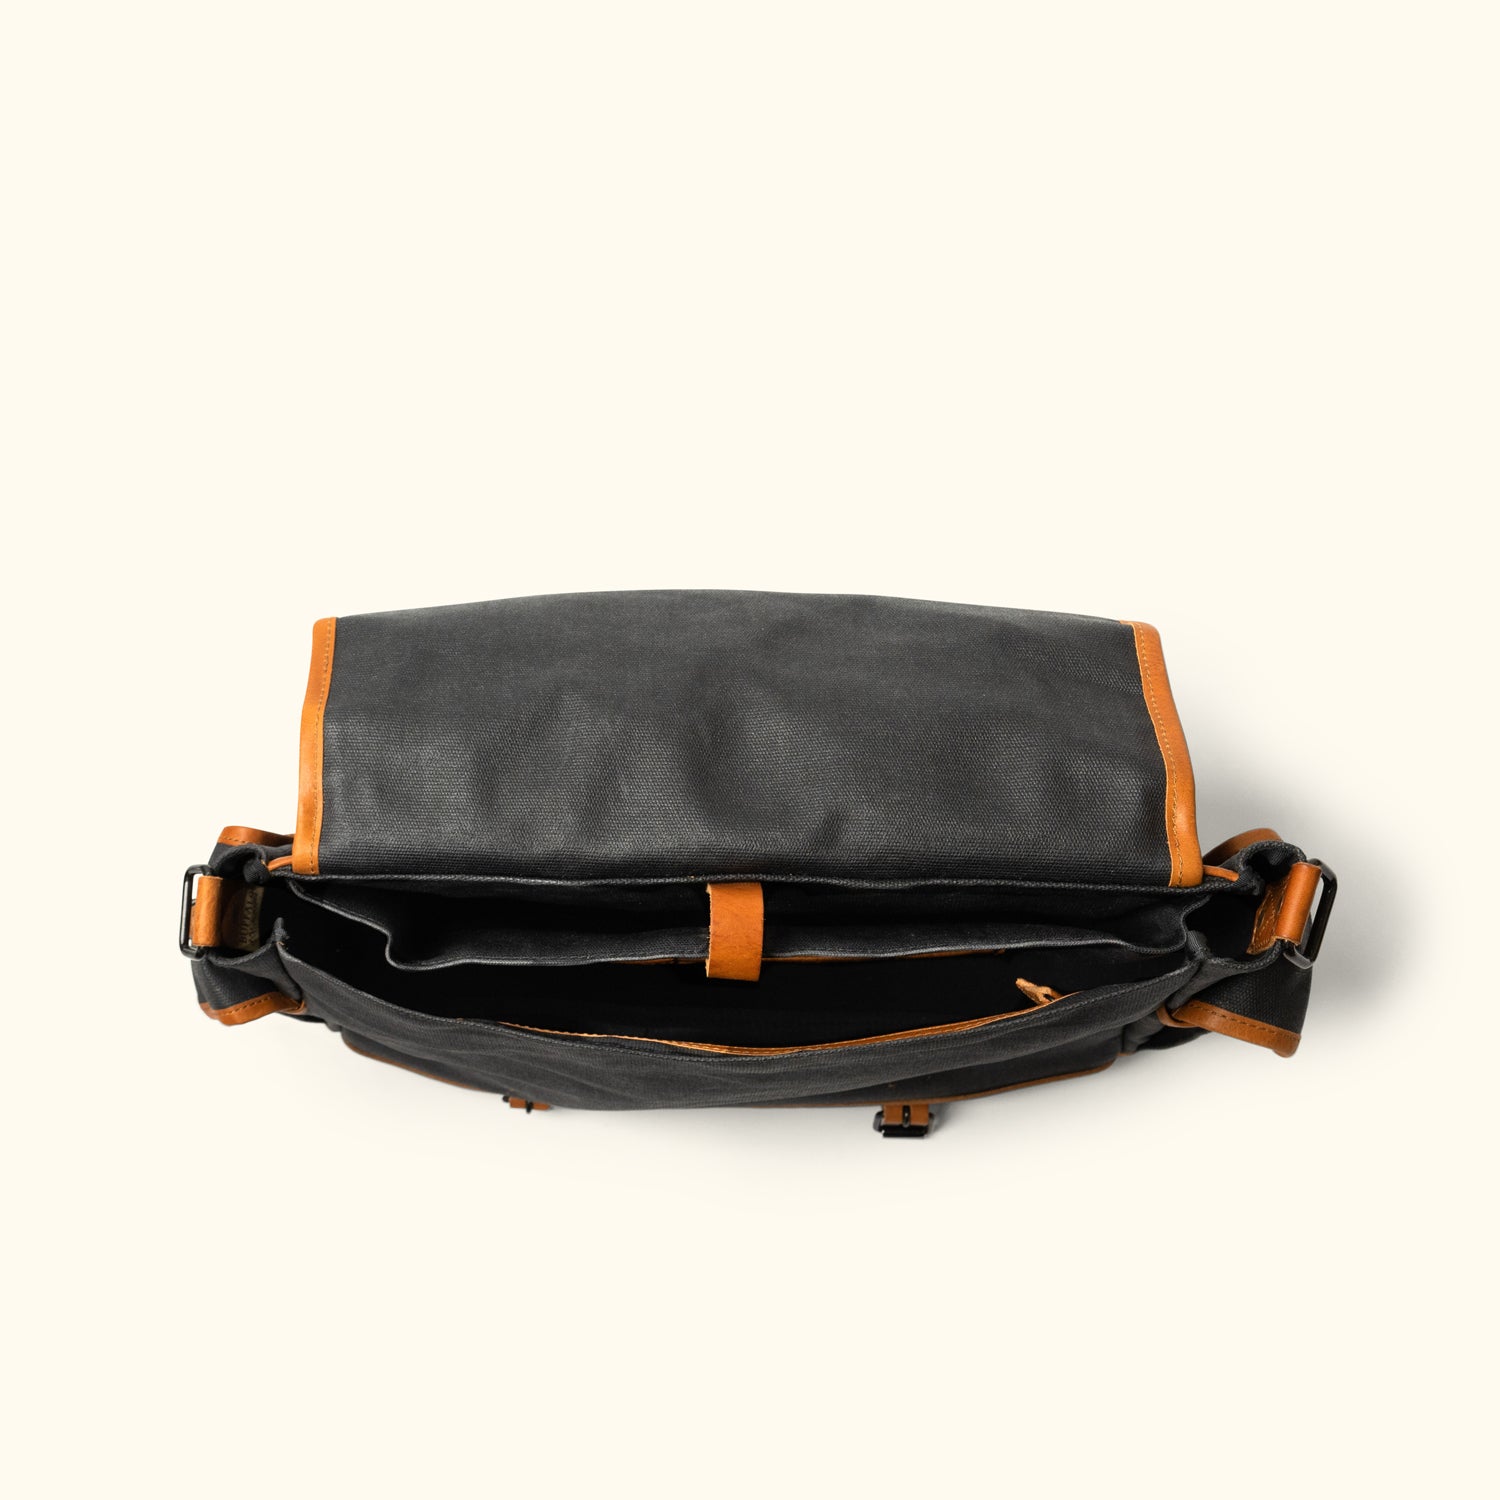 Buffalo Jackson Trading Co. Dakota Waxed Canvas Dopp Kit Toiletry Bag | Navy Charcoal w/ Saddle Tan Leather